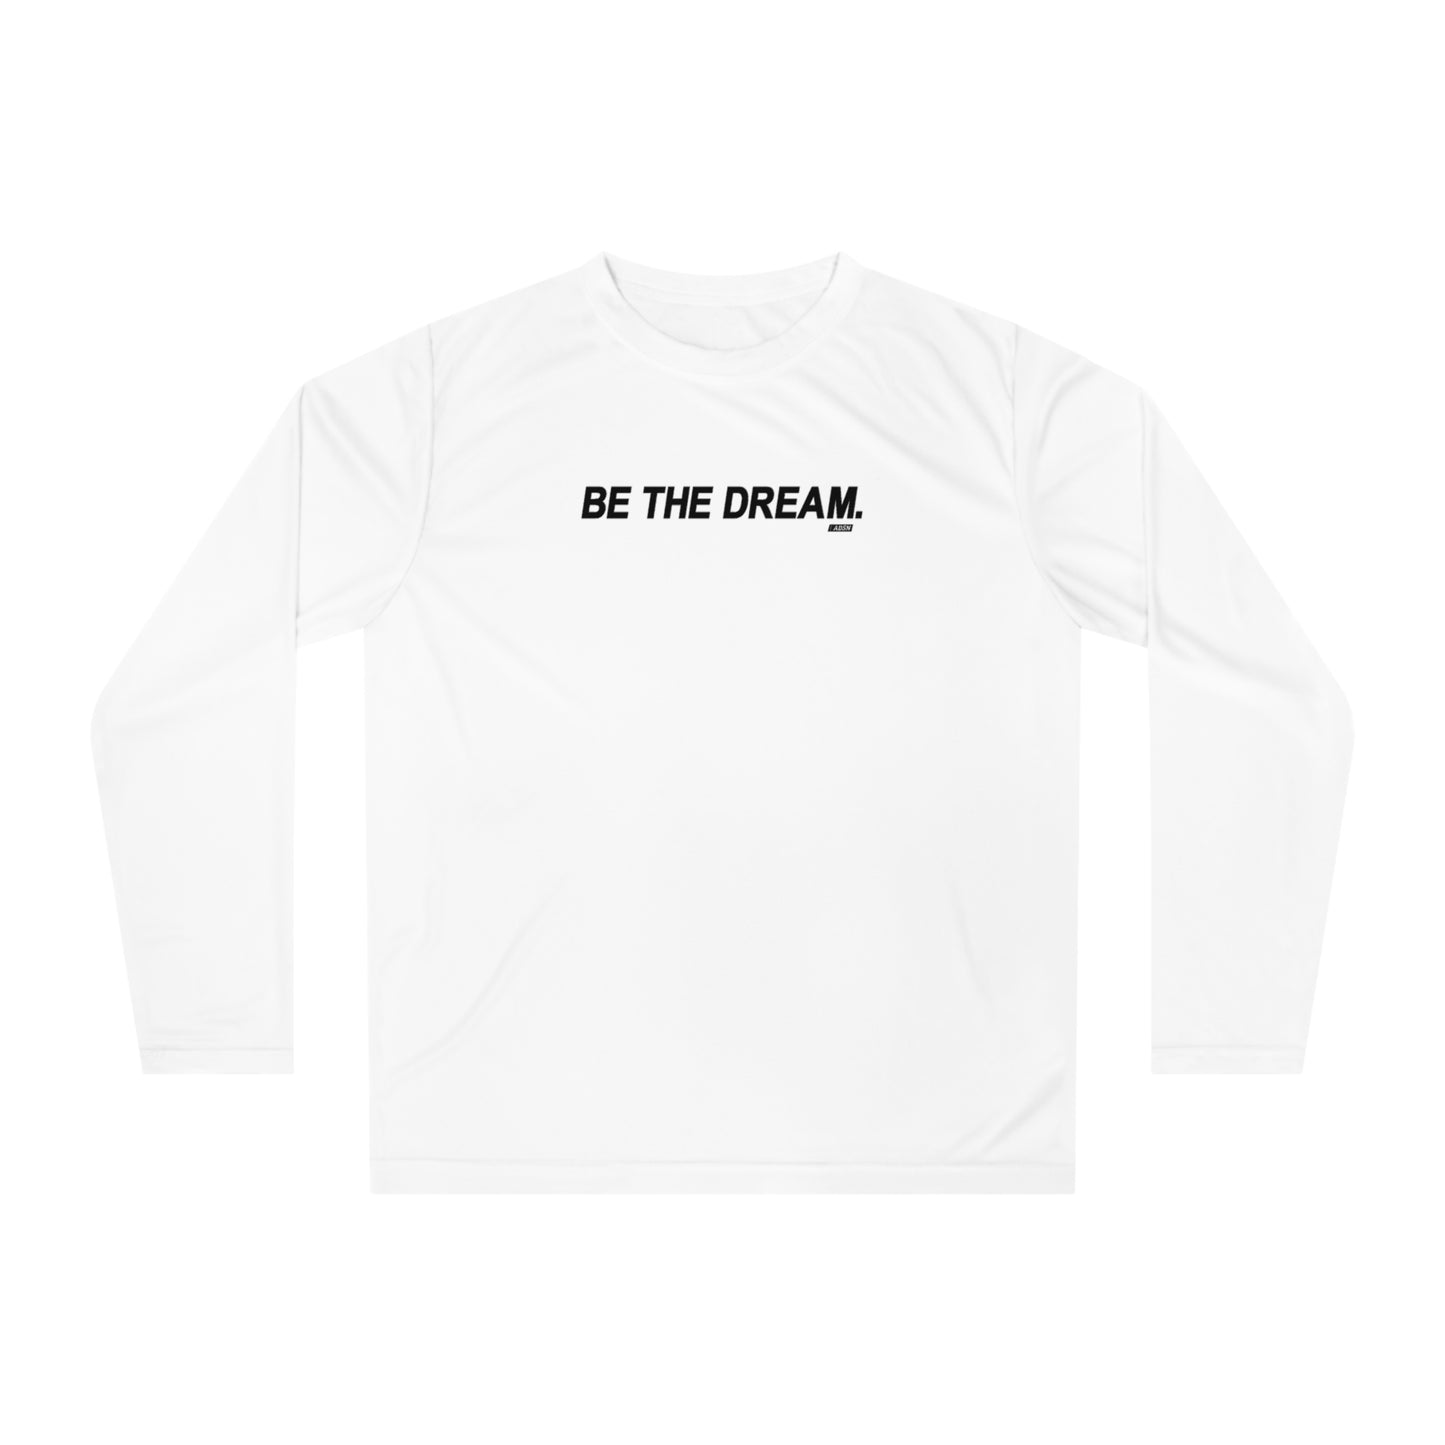 "Be The Dream" Men's Performance Long Sleeve Shirt